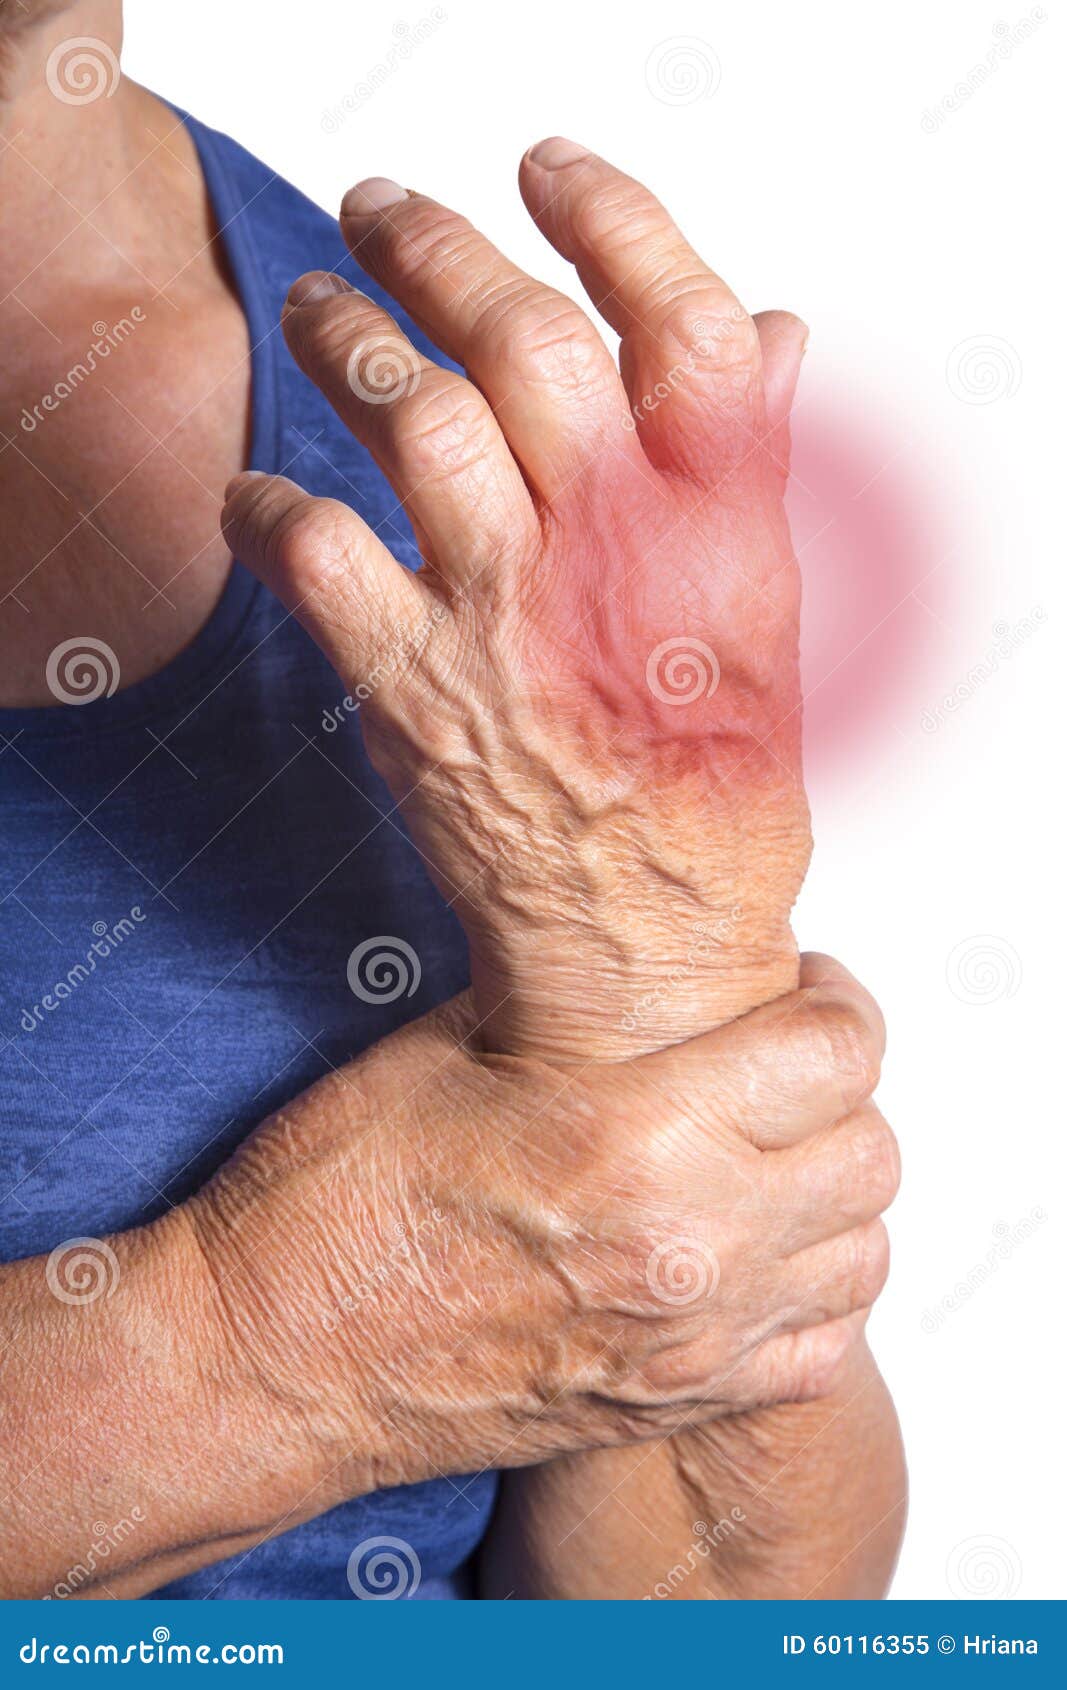 hand deformed from rheumatoid arthritis